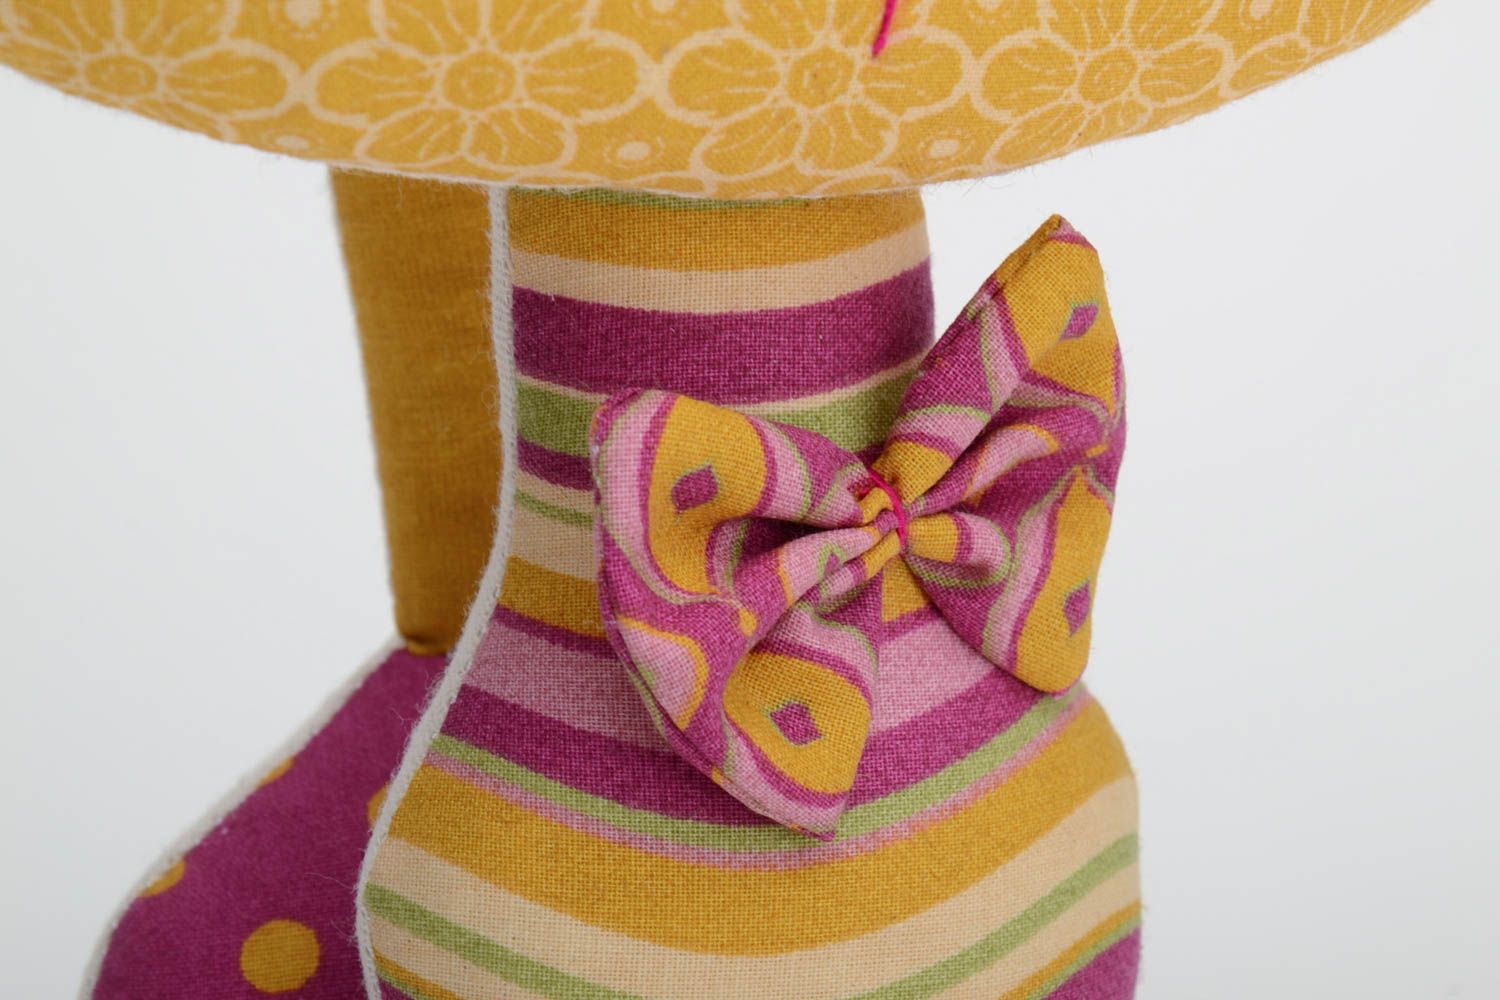 Petite peluche en tissu de coton multicolore faite main originale chat photo 4